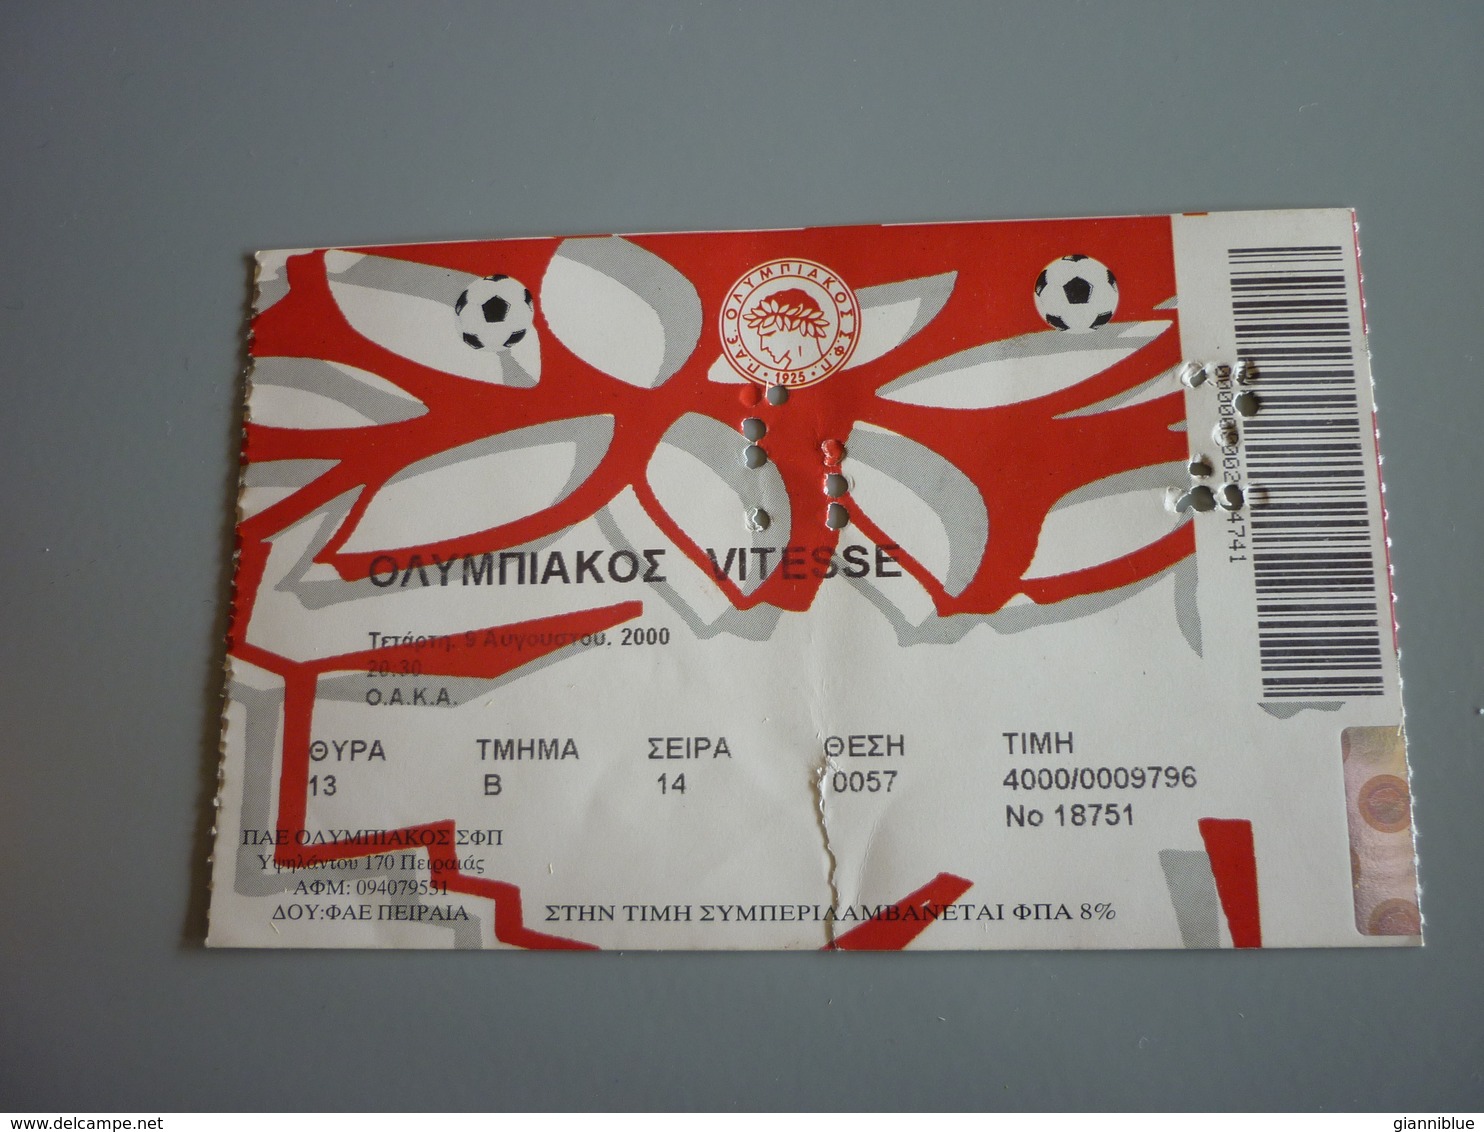 Olympiakos-Vitesse International Friendly Game Football Match Ticket Stub 09/08/2000 Fisherman's Friend Smirnoff Citroen - Match Tickets